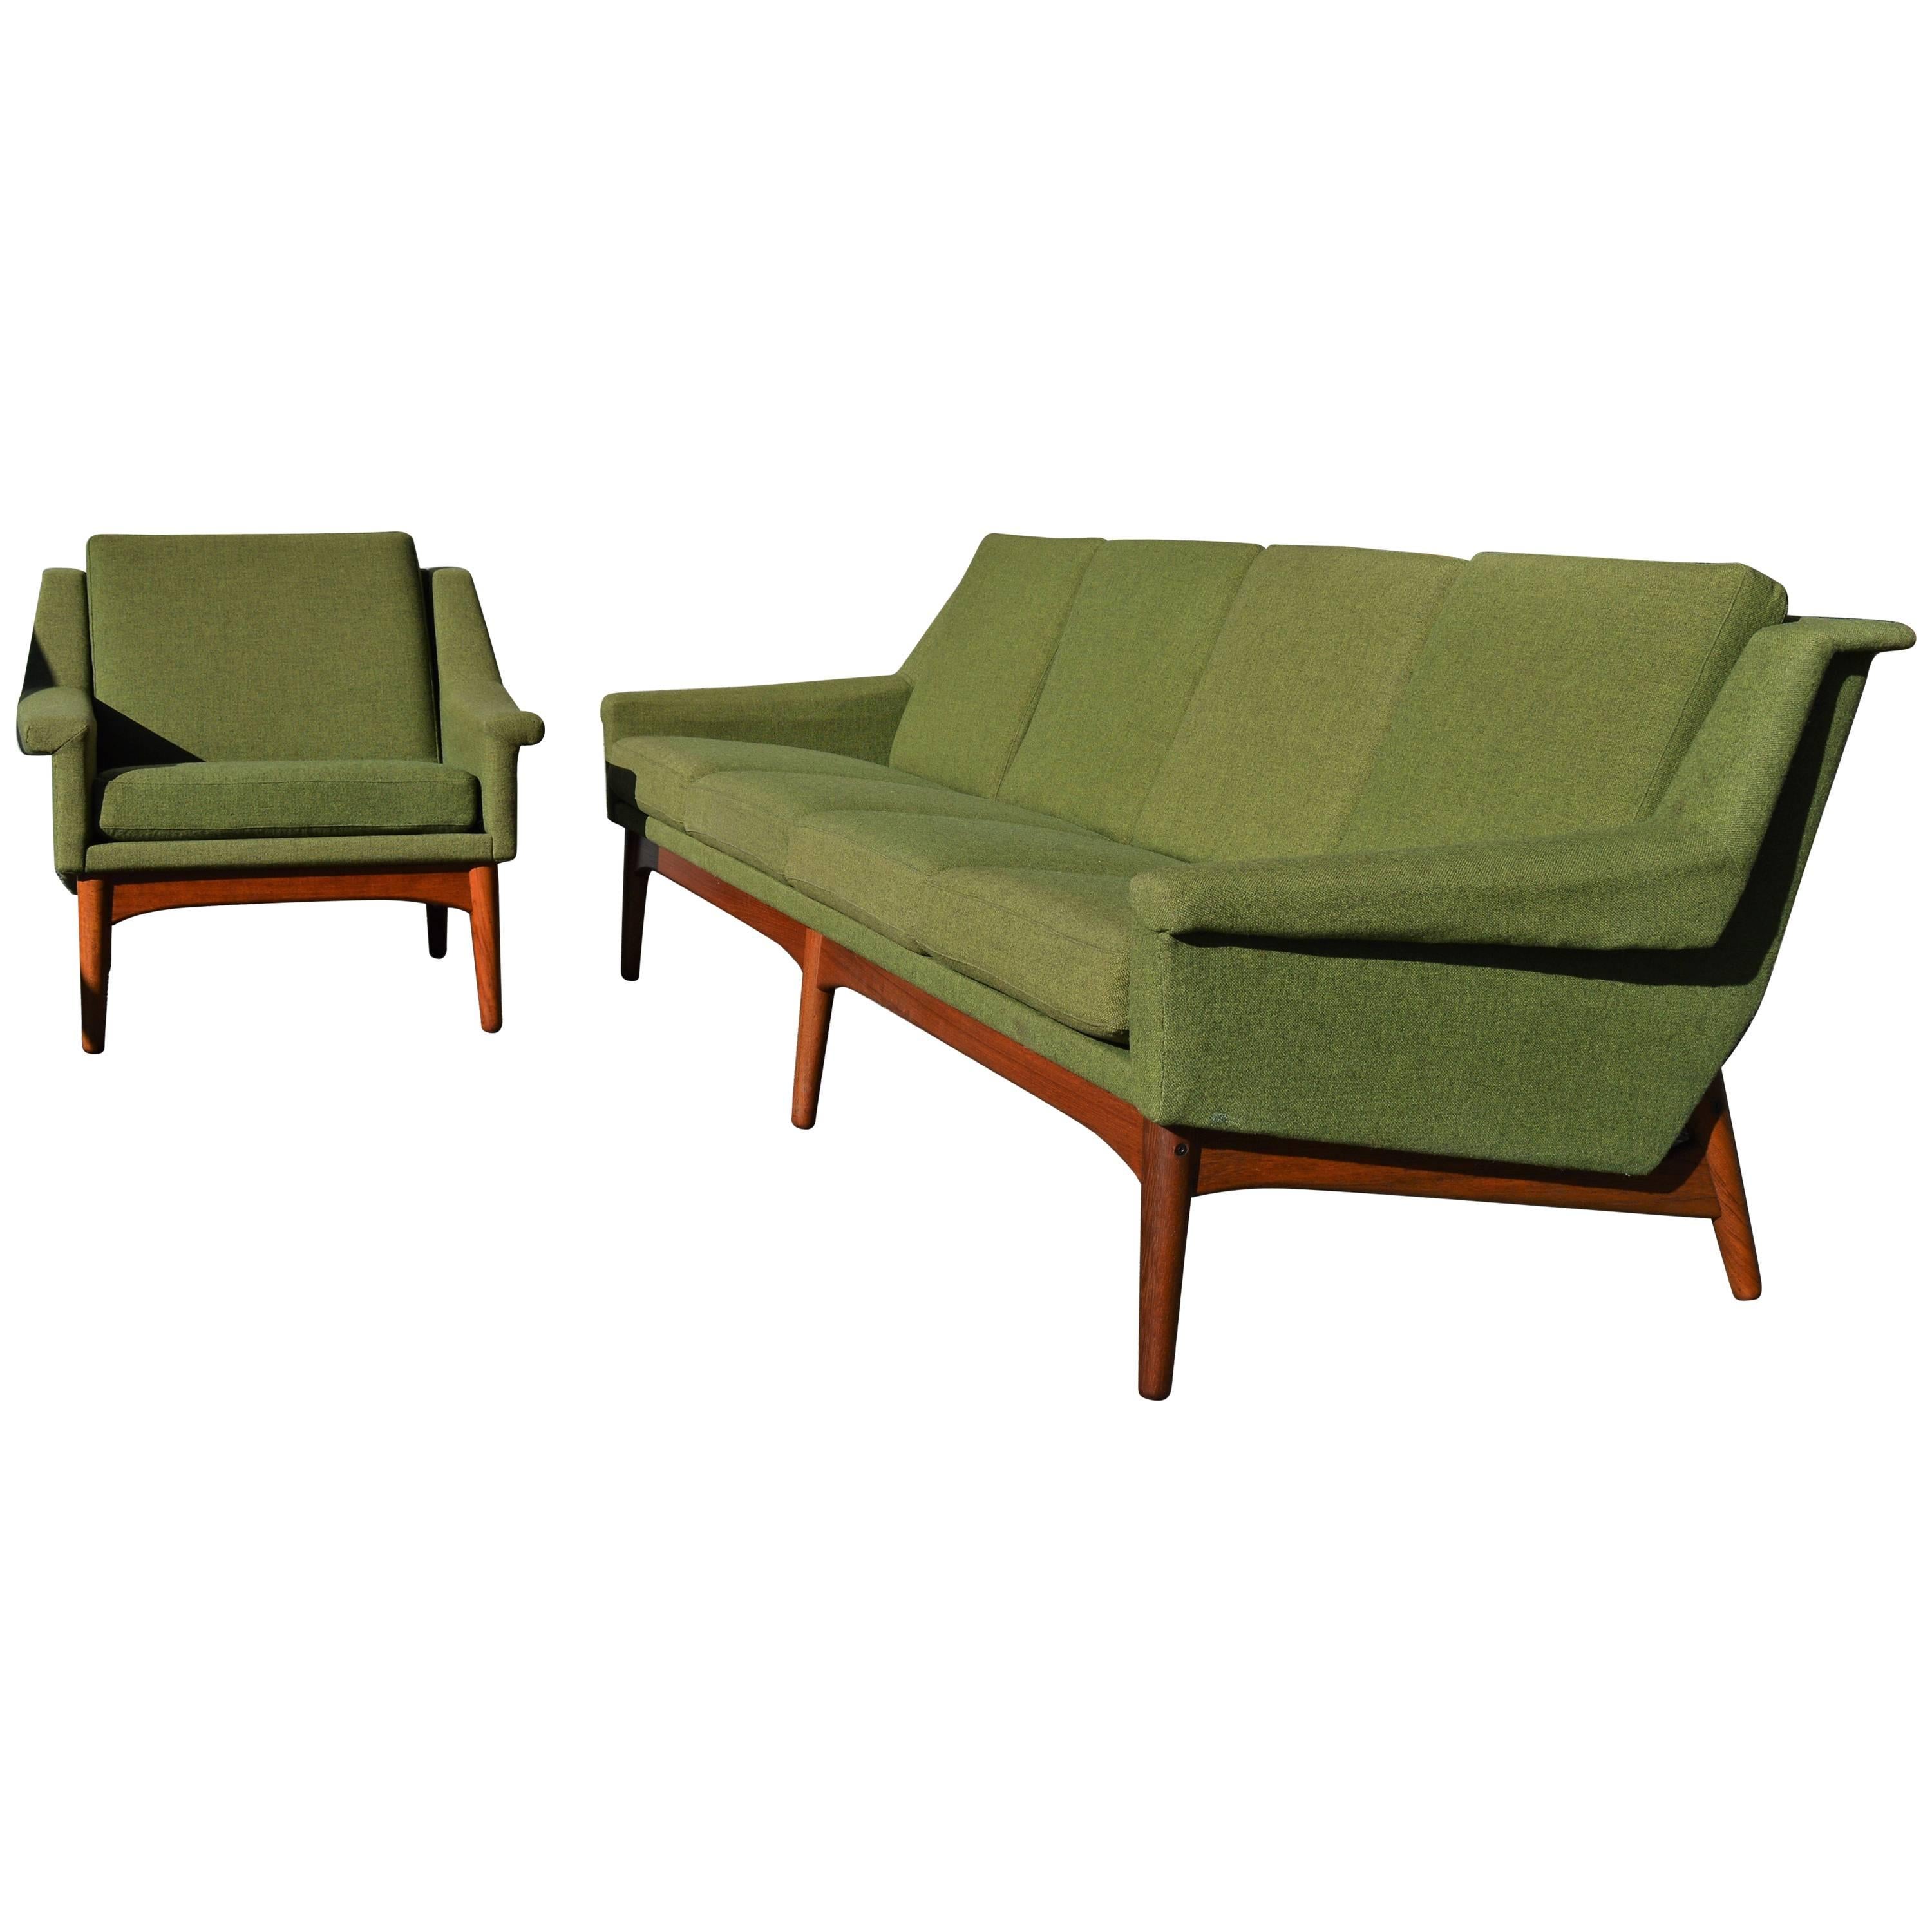 Bramin Teak Base Sofa and Lounge Chair in Sage Green Wool